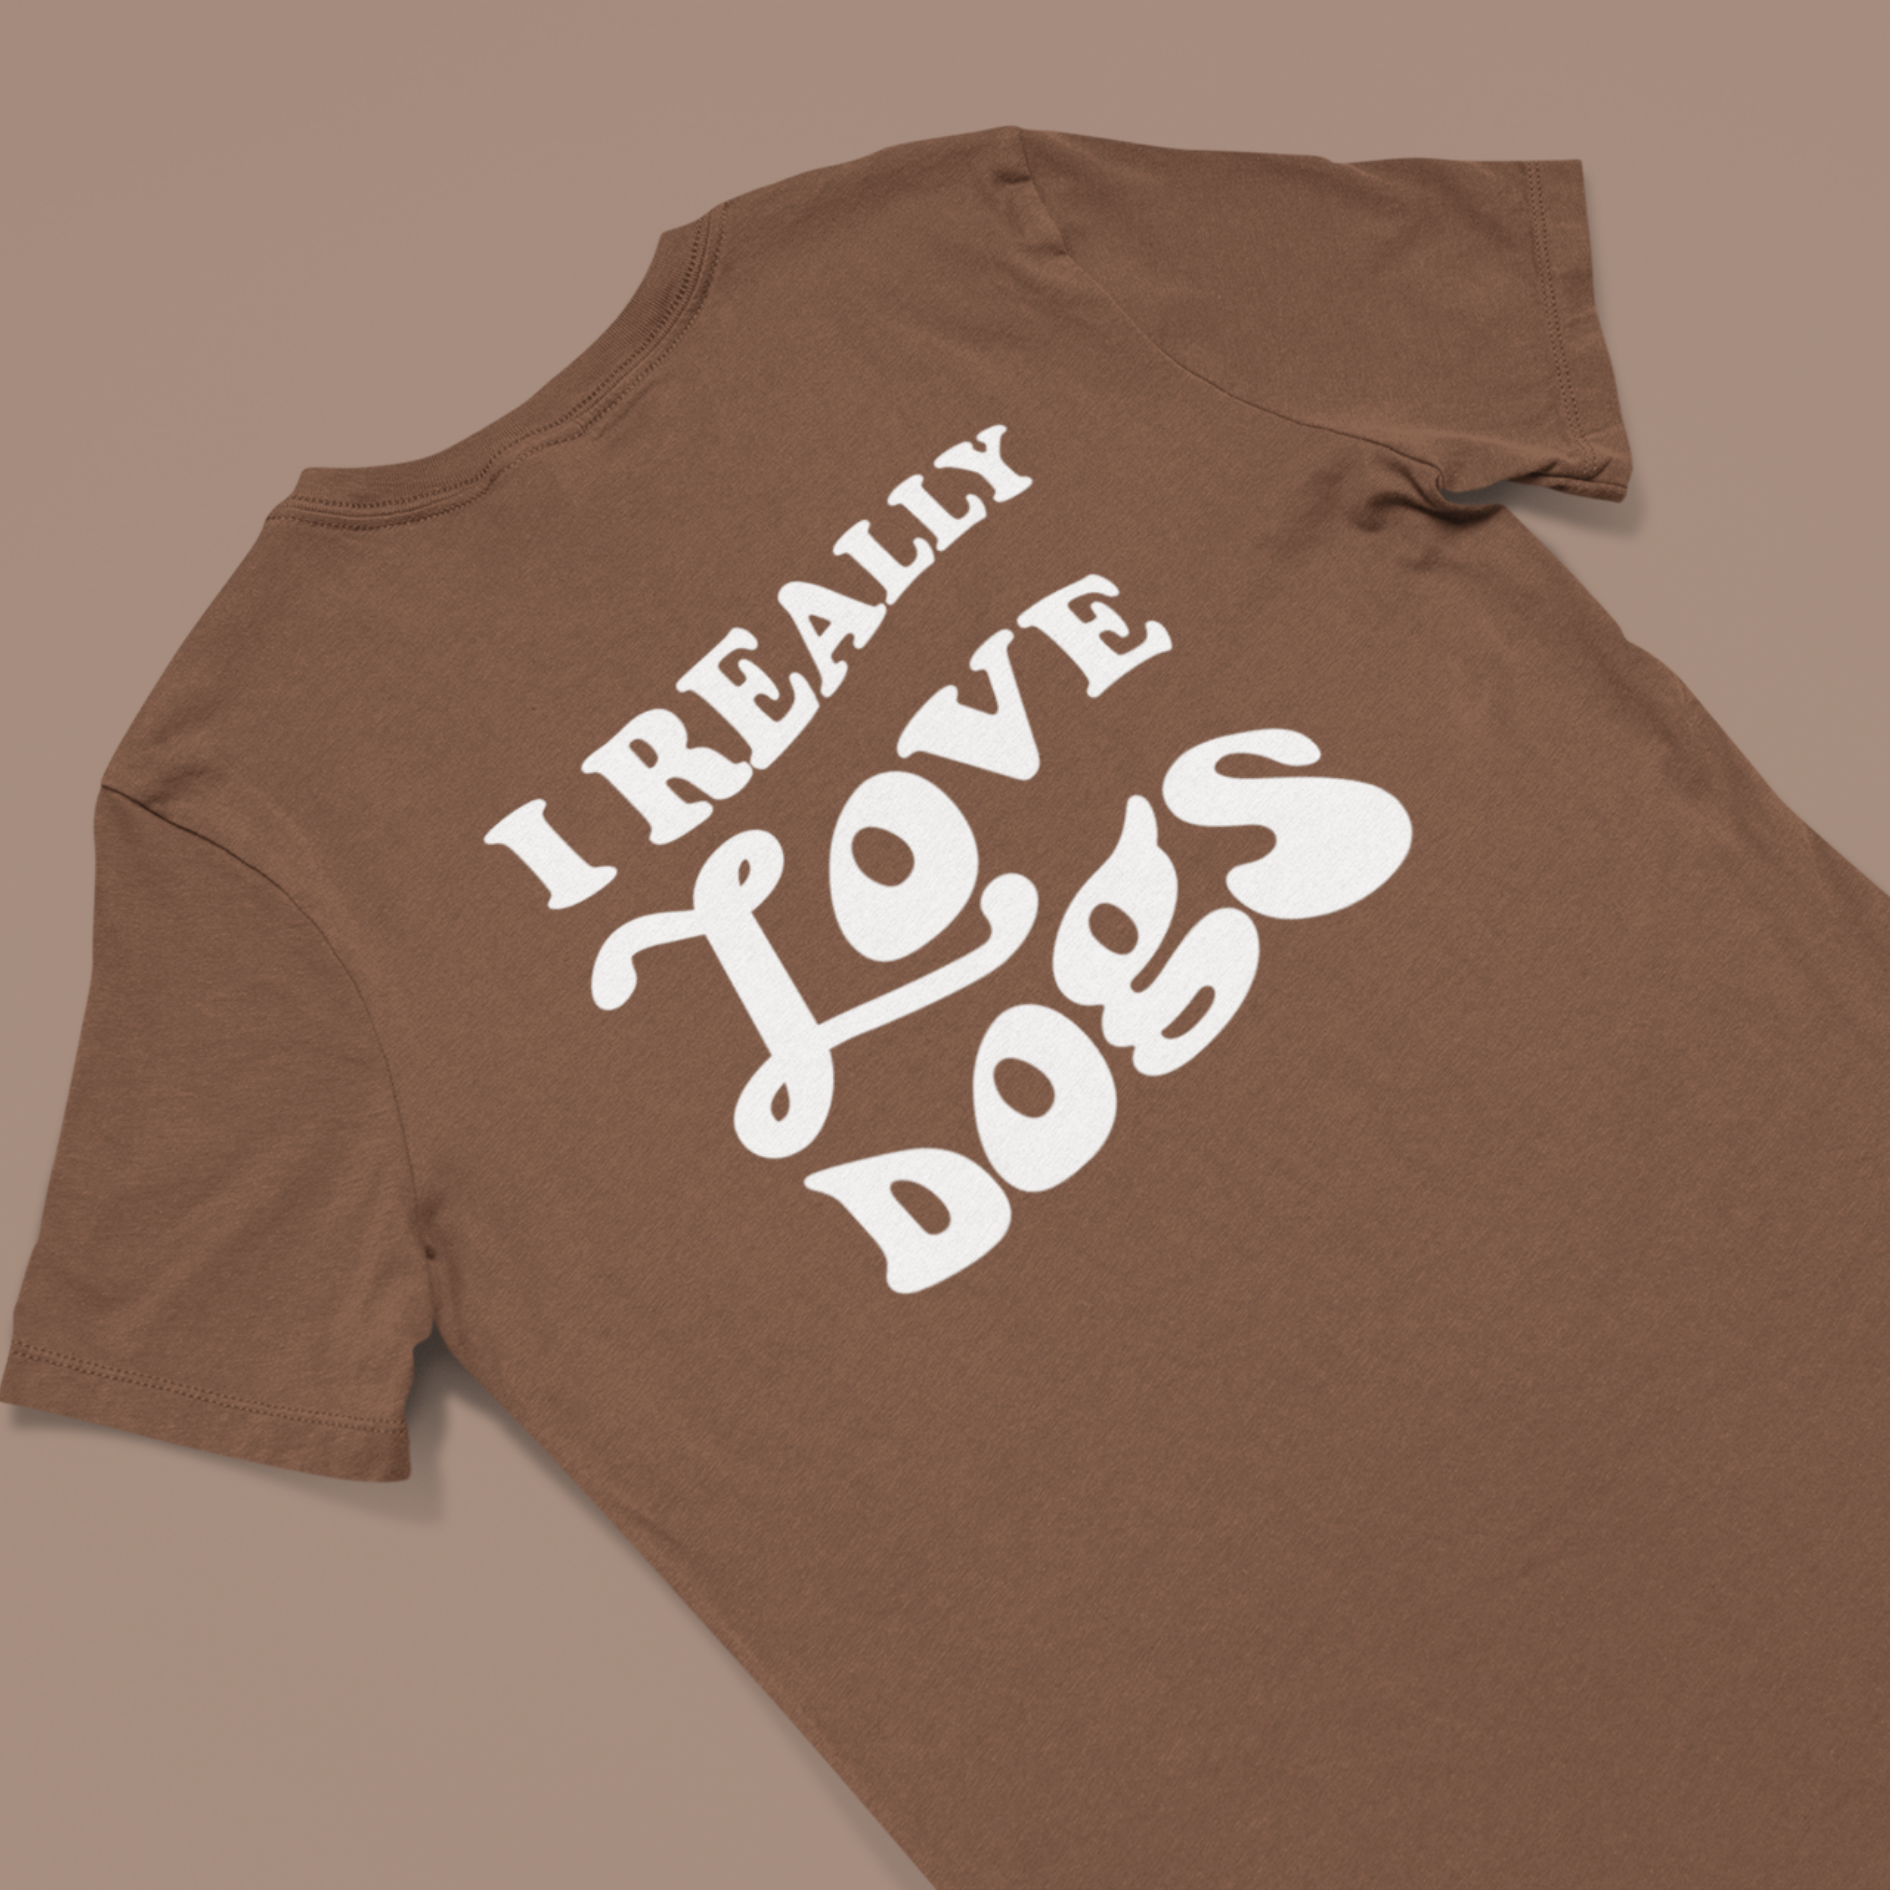 "I Really Love Dogs" Espresso T-Shirt